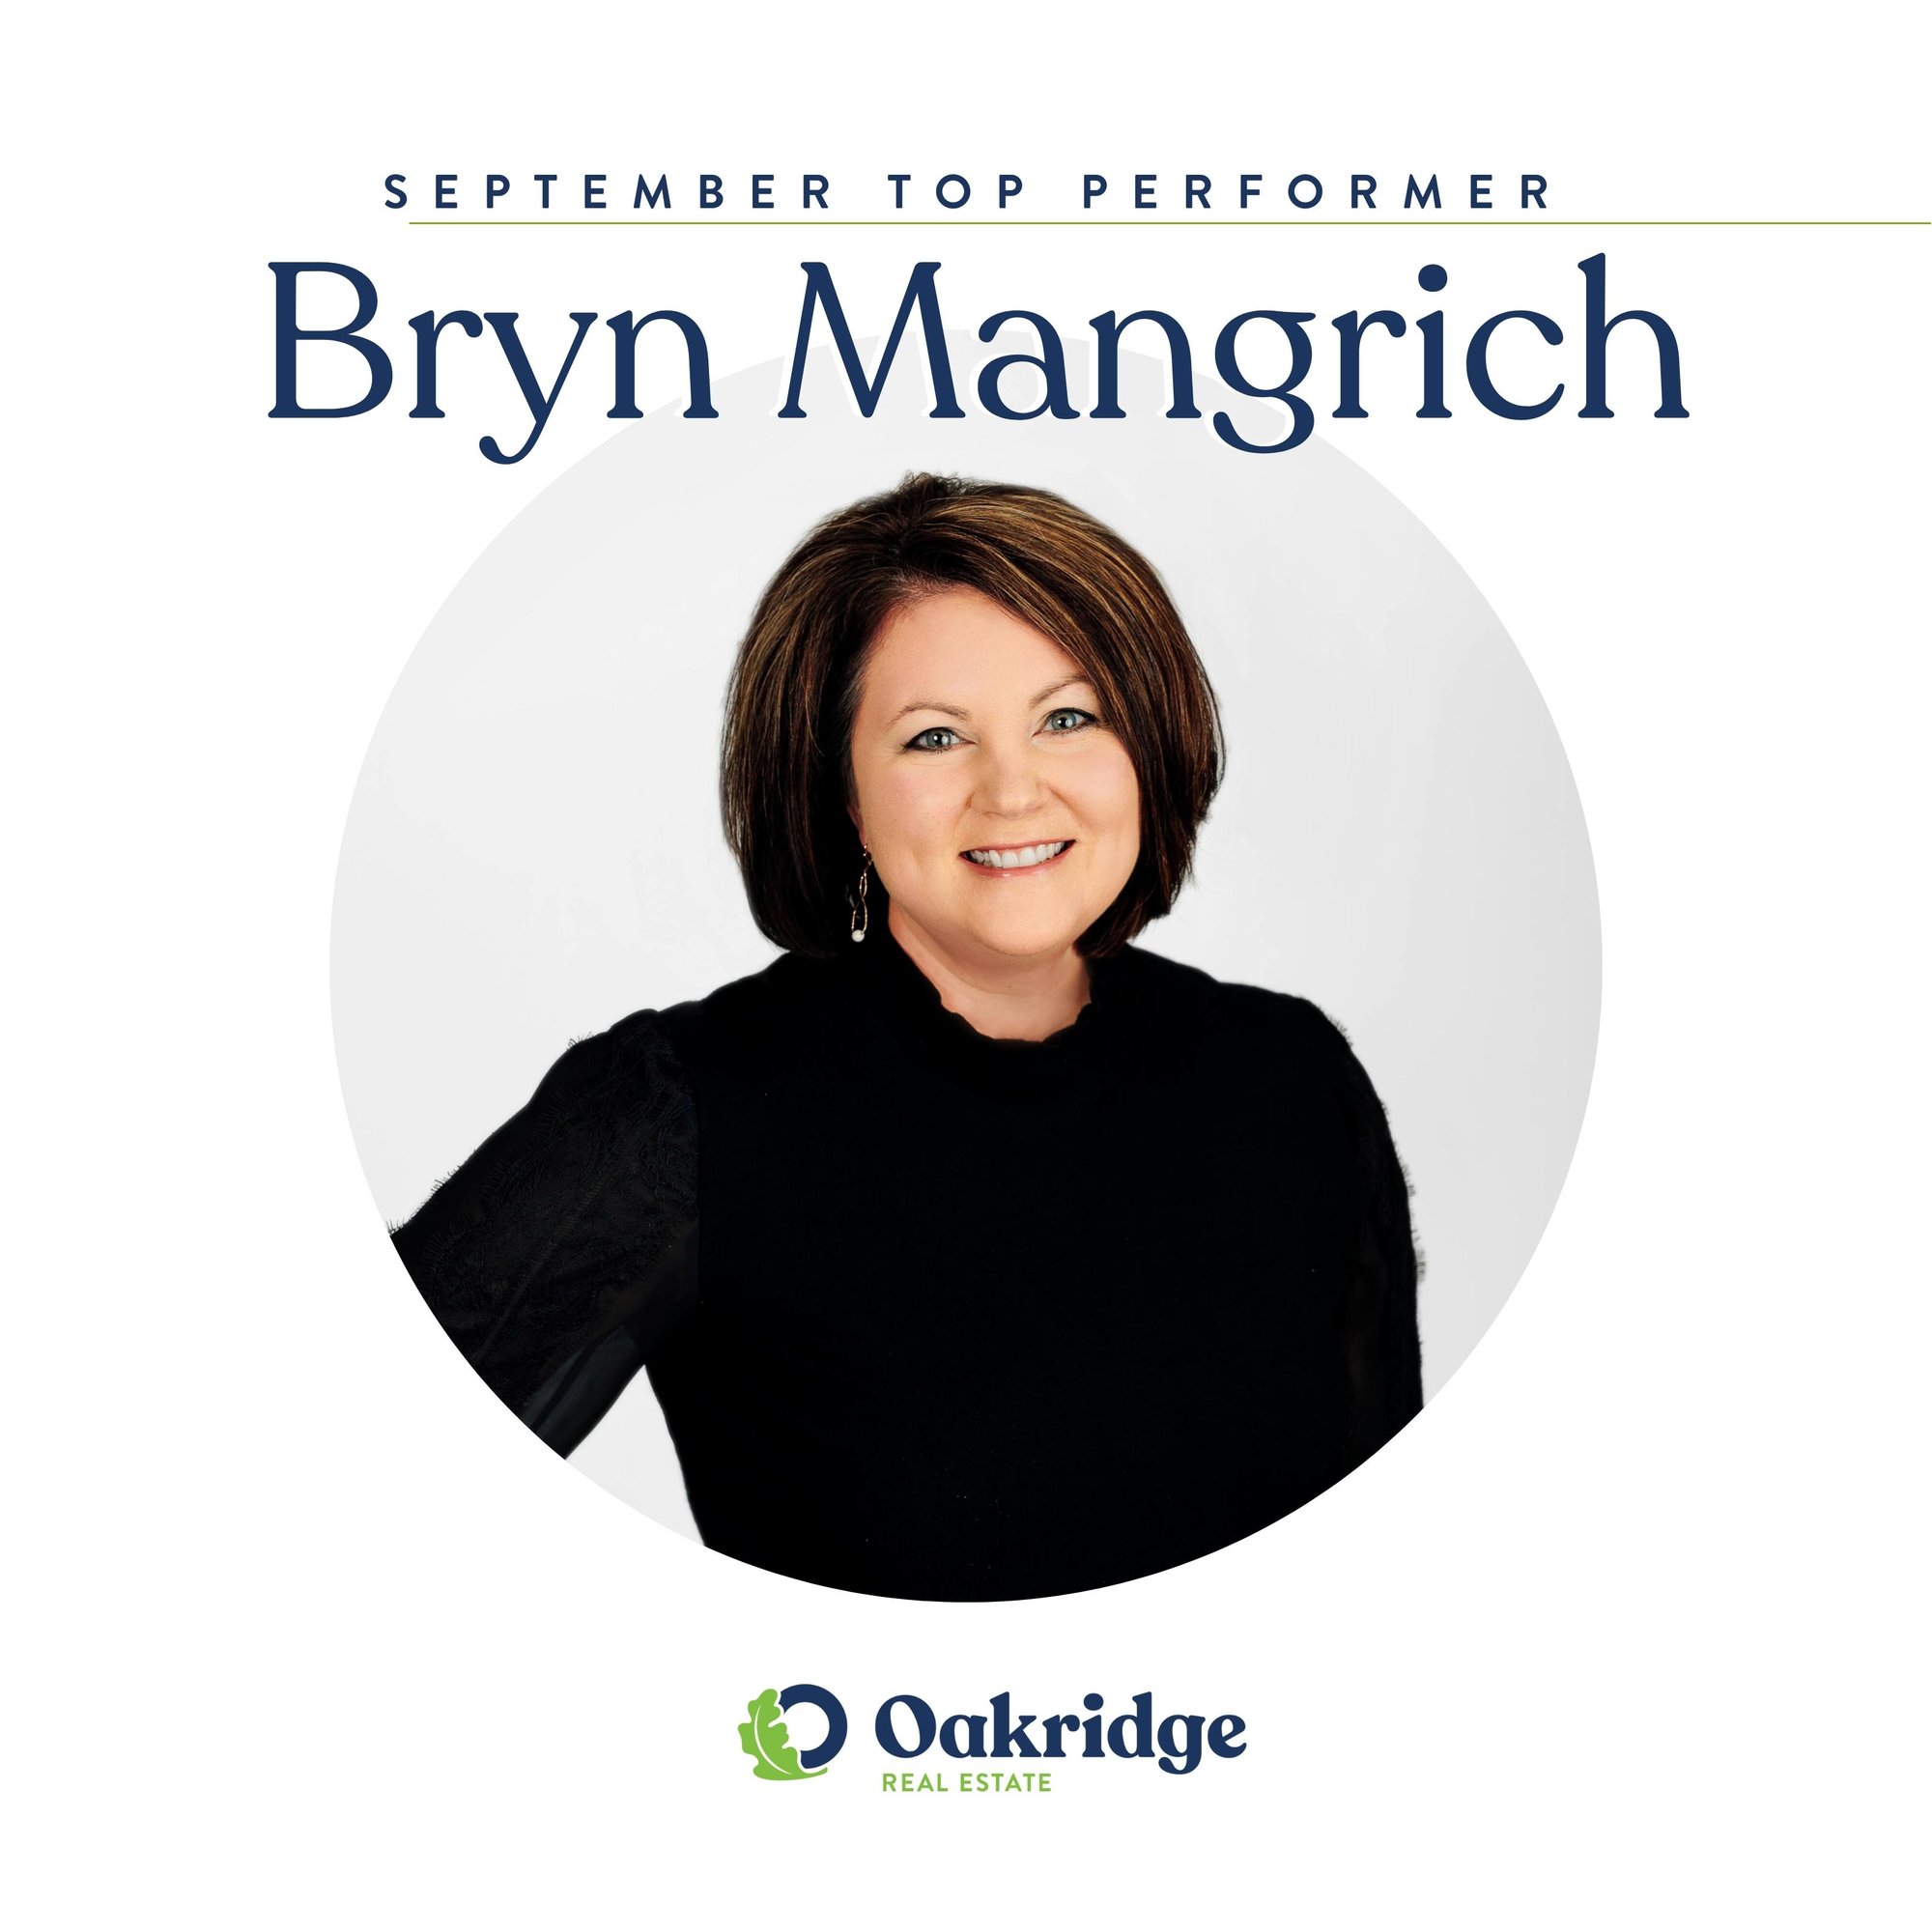 Bryn Mangrich September Top Performer | Oakridge Real Estate